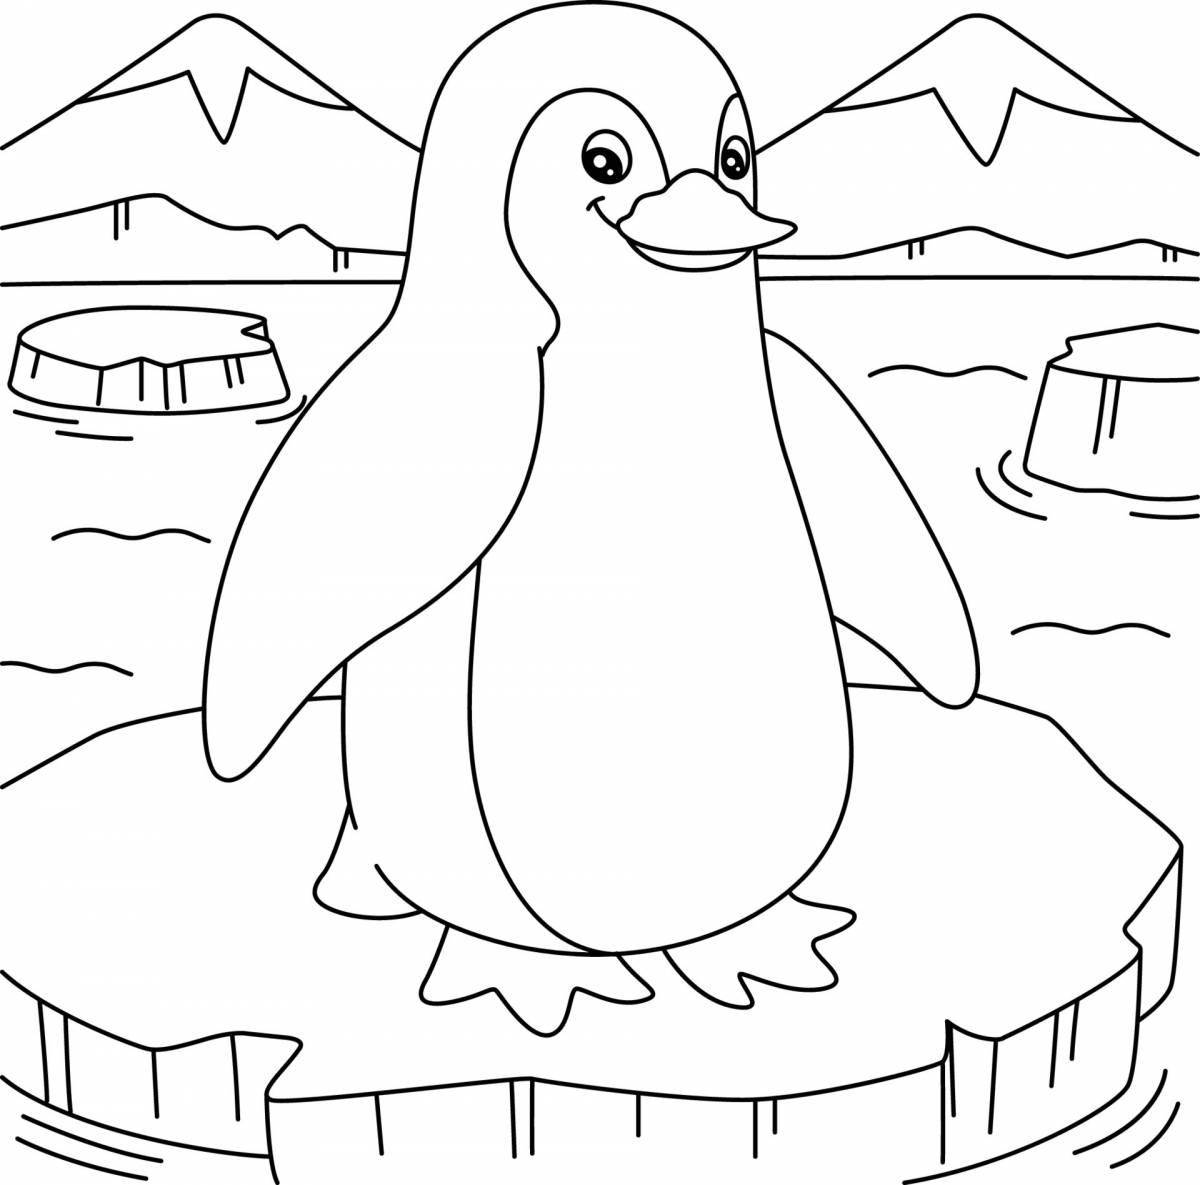 Antarctica coloring book for kids